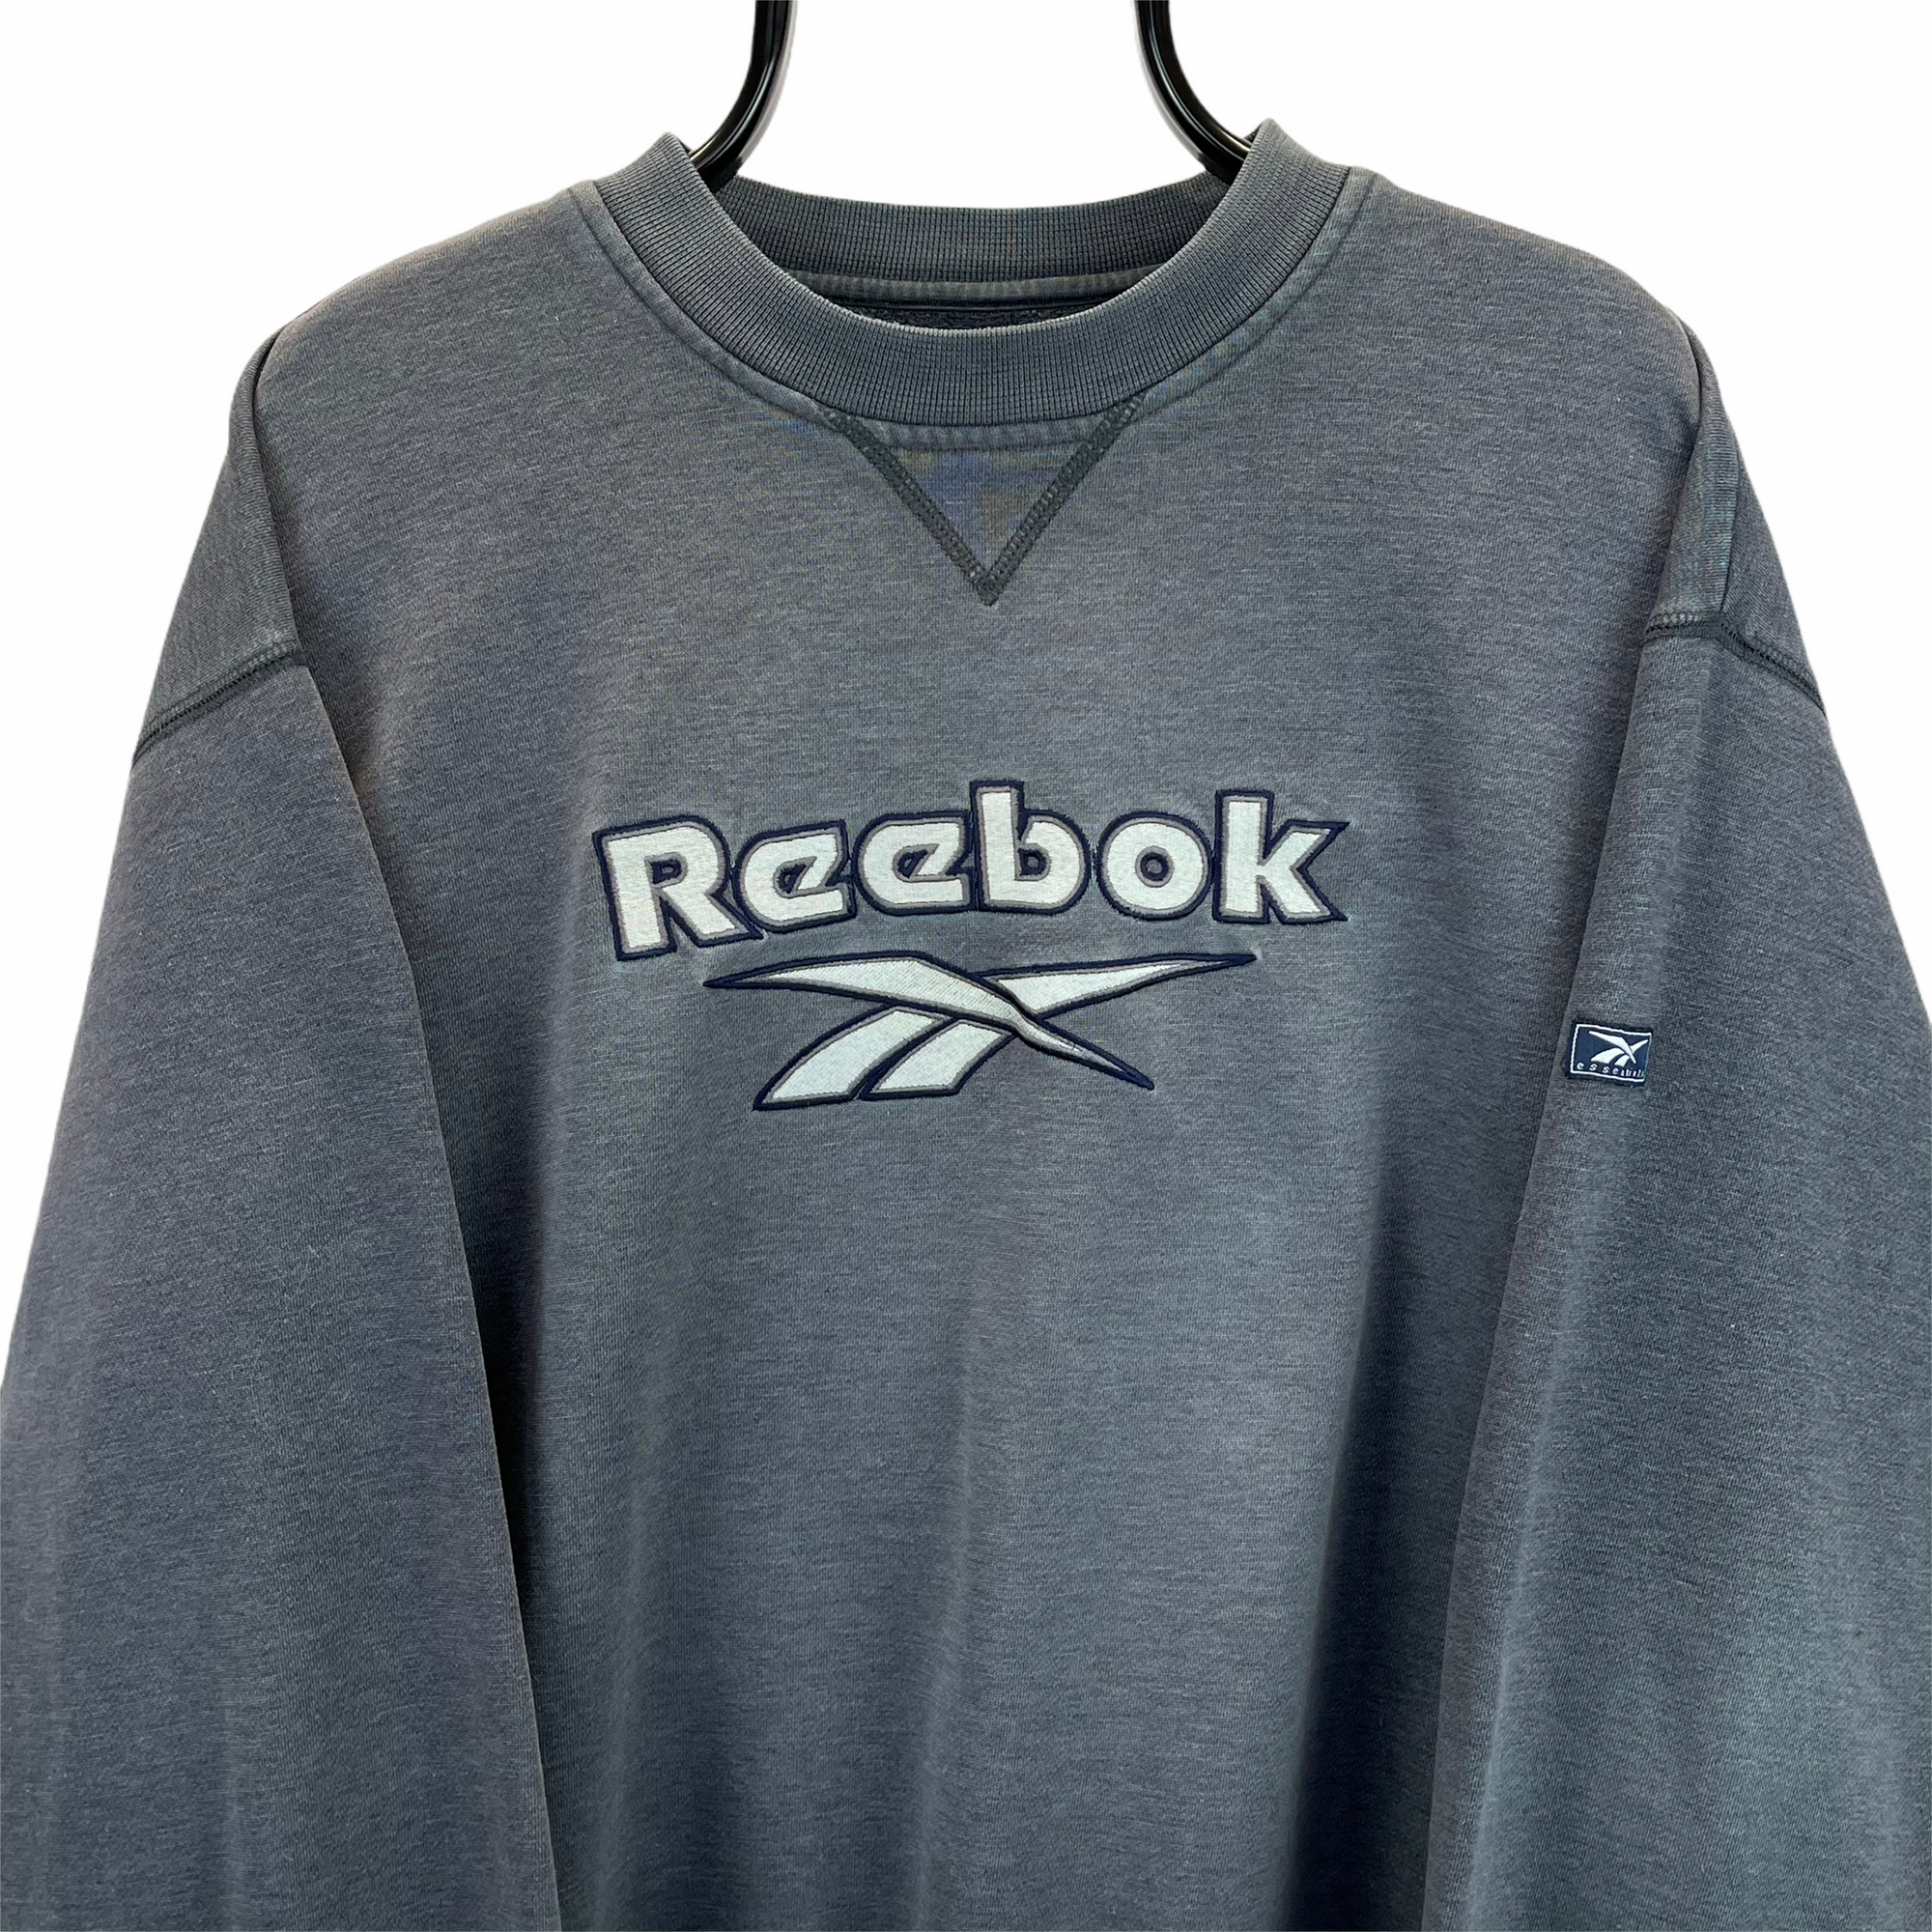 Vintage 90s Reebok Spellout Sweatshirt in Deep Grey - Men's Large/Women's XL